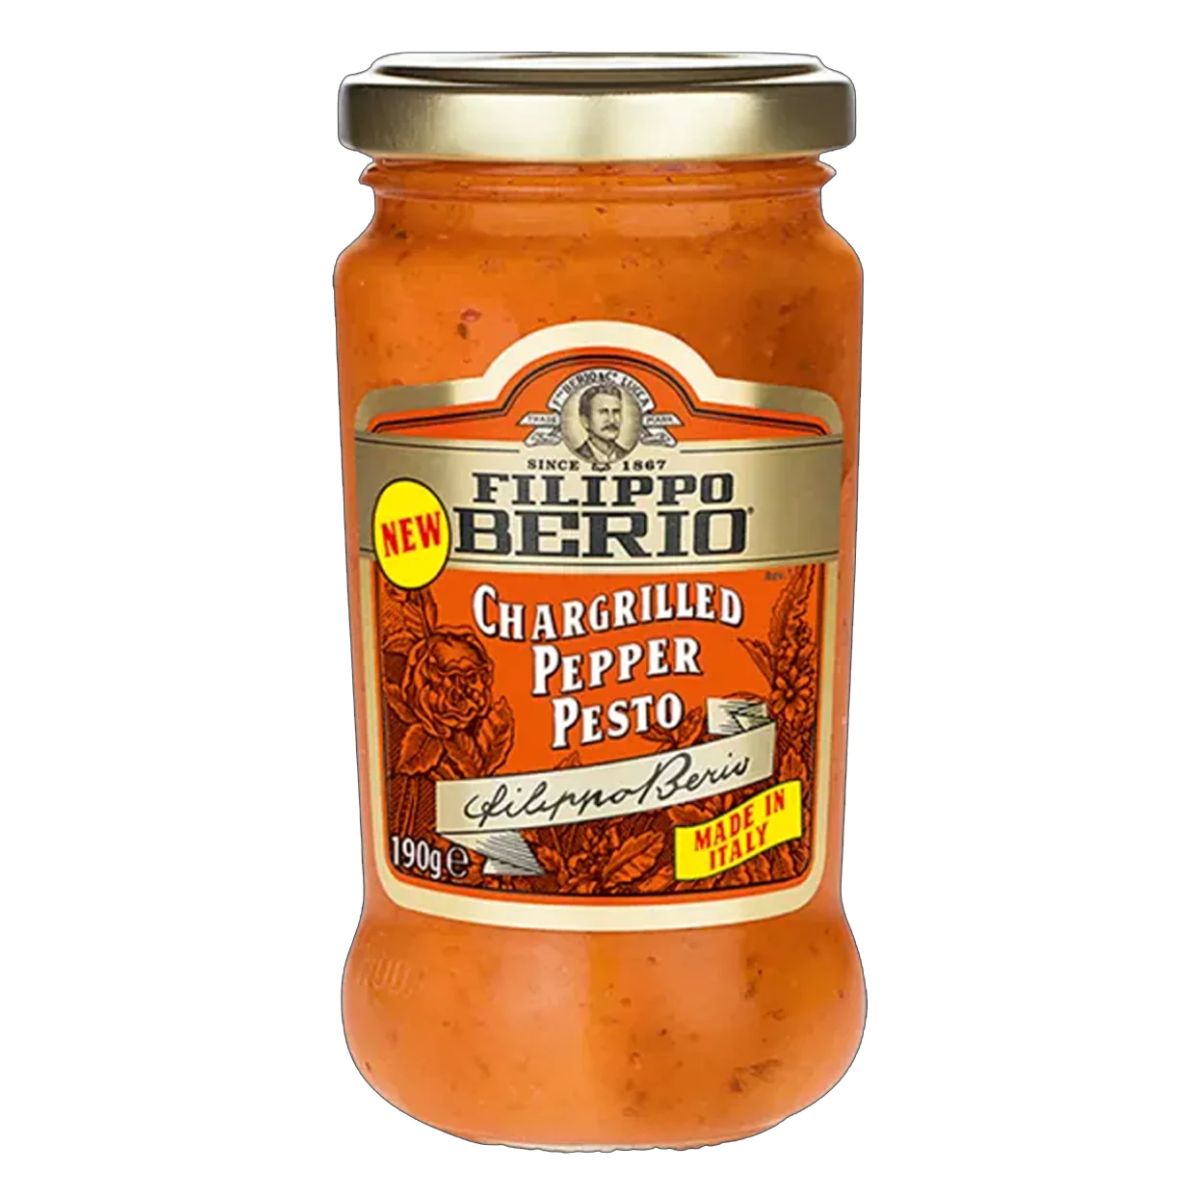 A jar of Filippo Berio - Chargrilled Pepper Pesto - 190g.